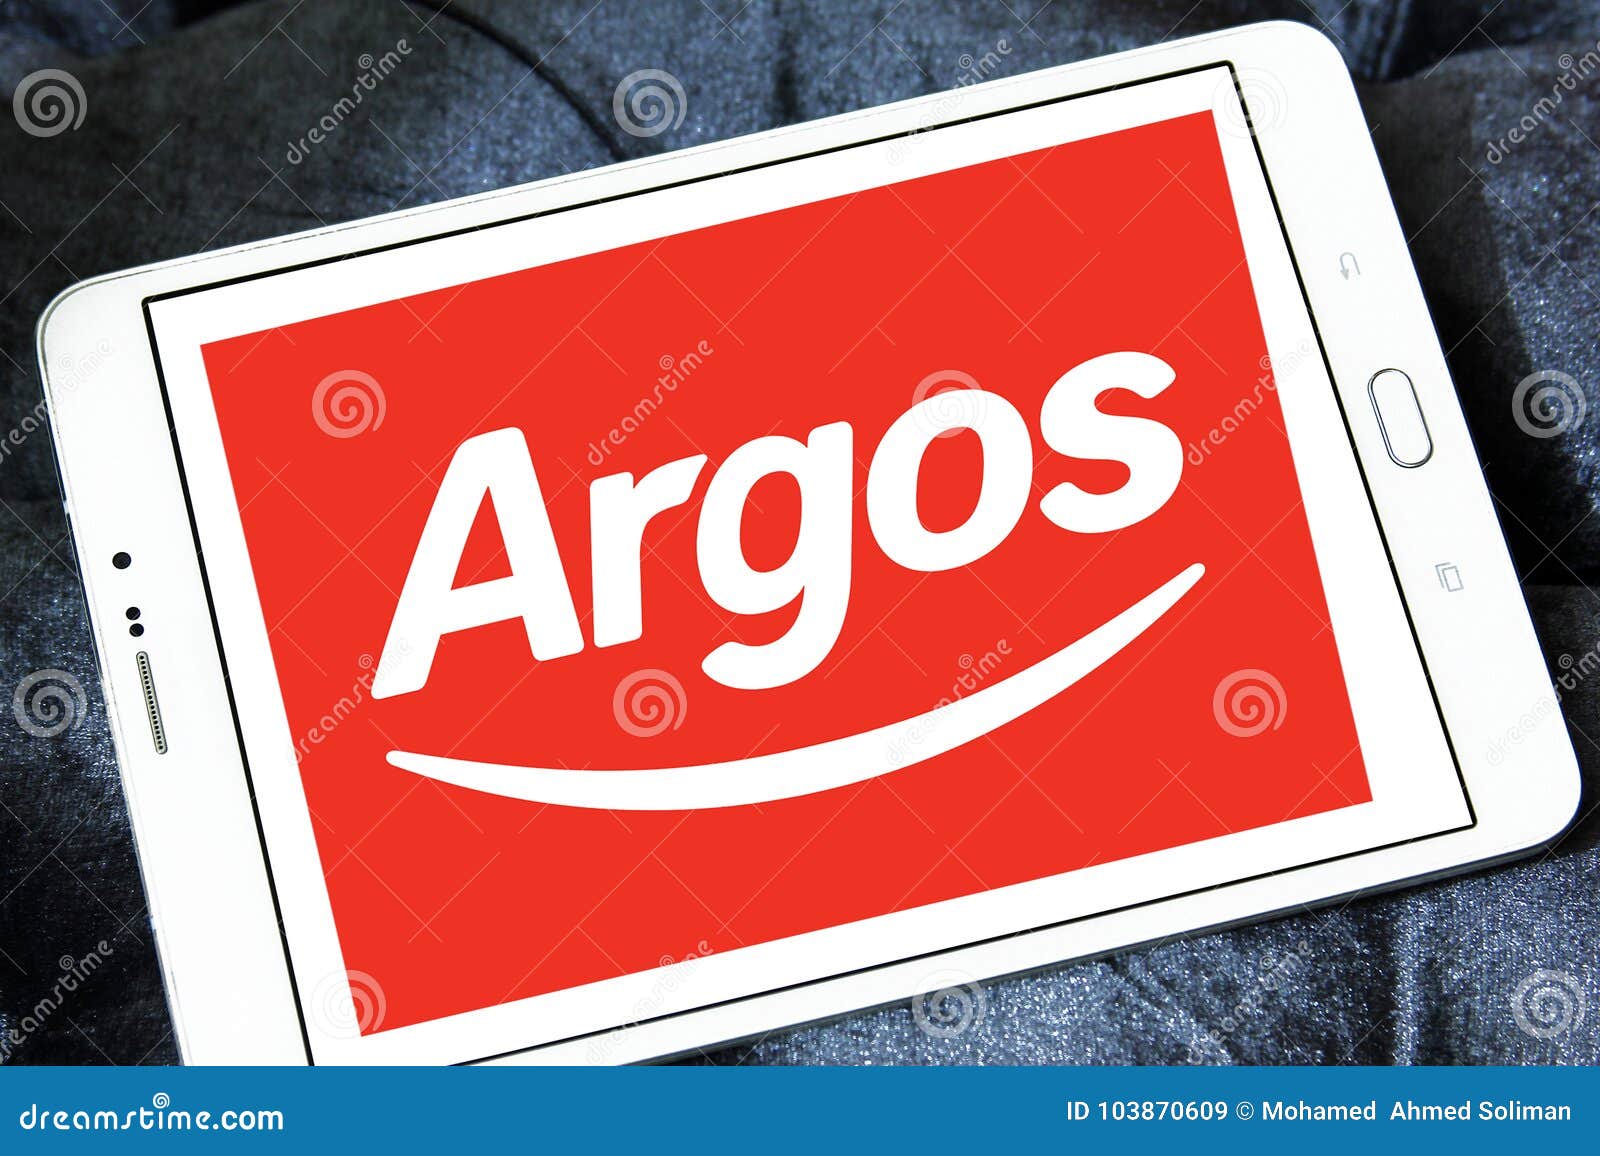 Argos retailer logo editorial stock image. Image of sign - 103870609